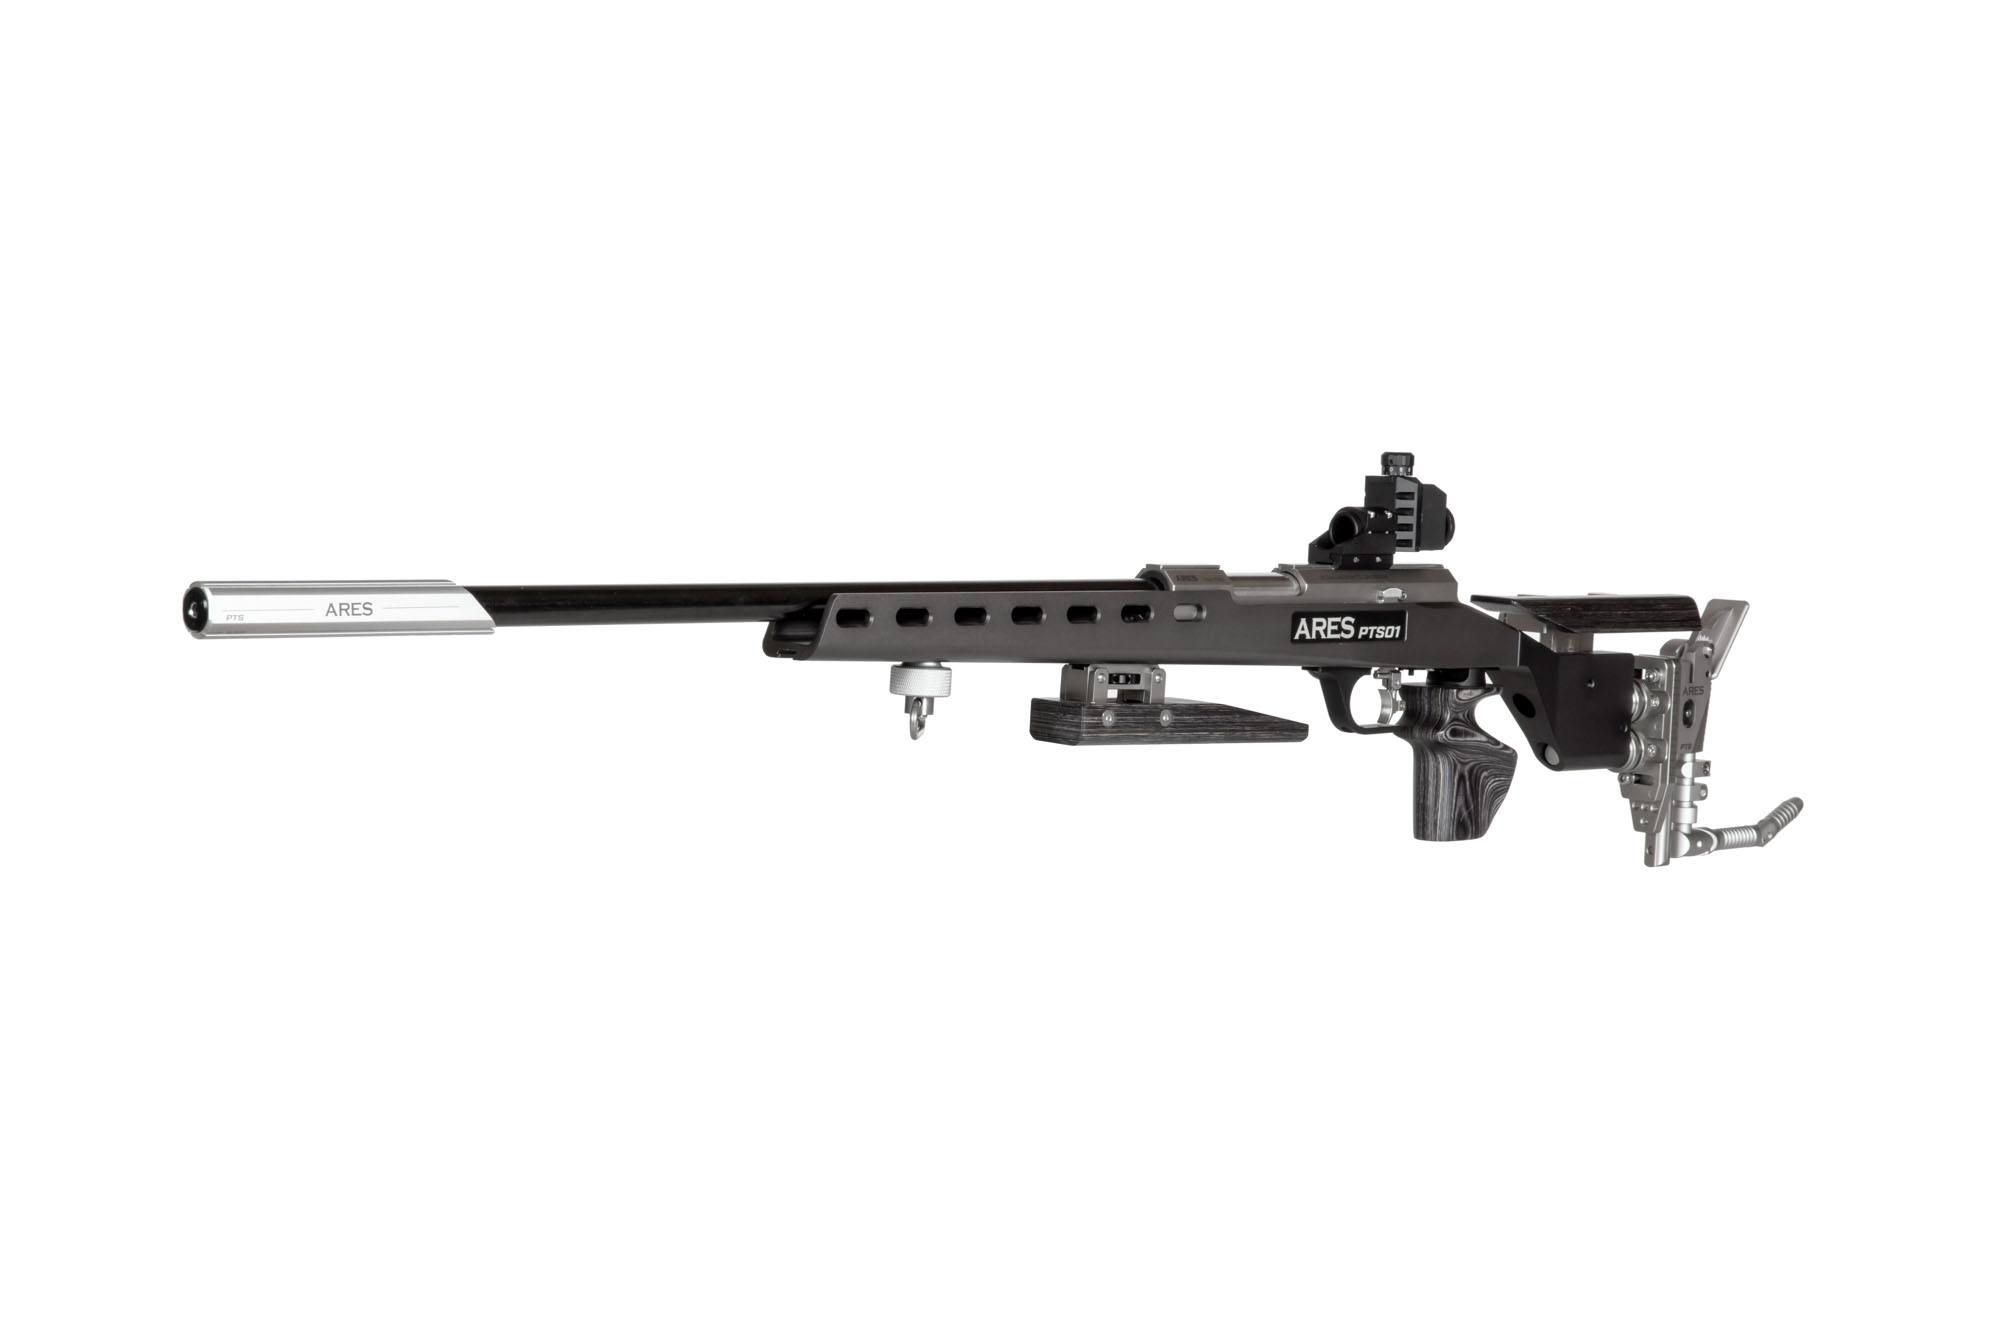 PTS-001 Single Shot Rifle Replica